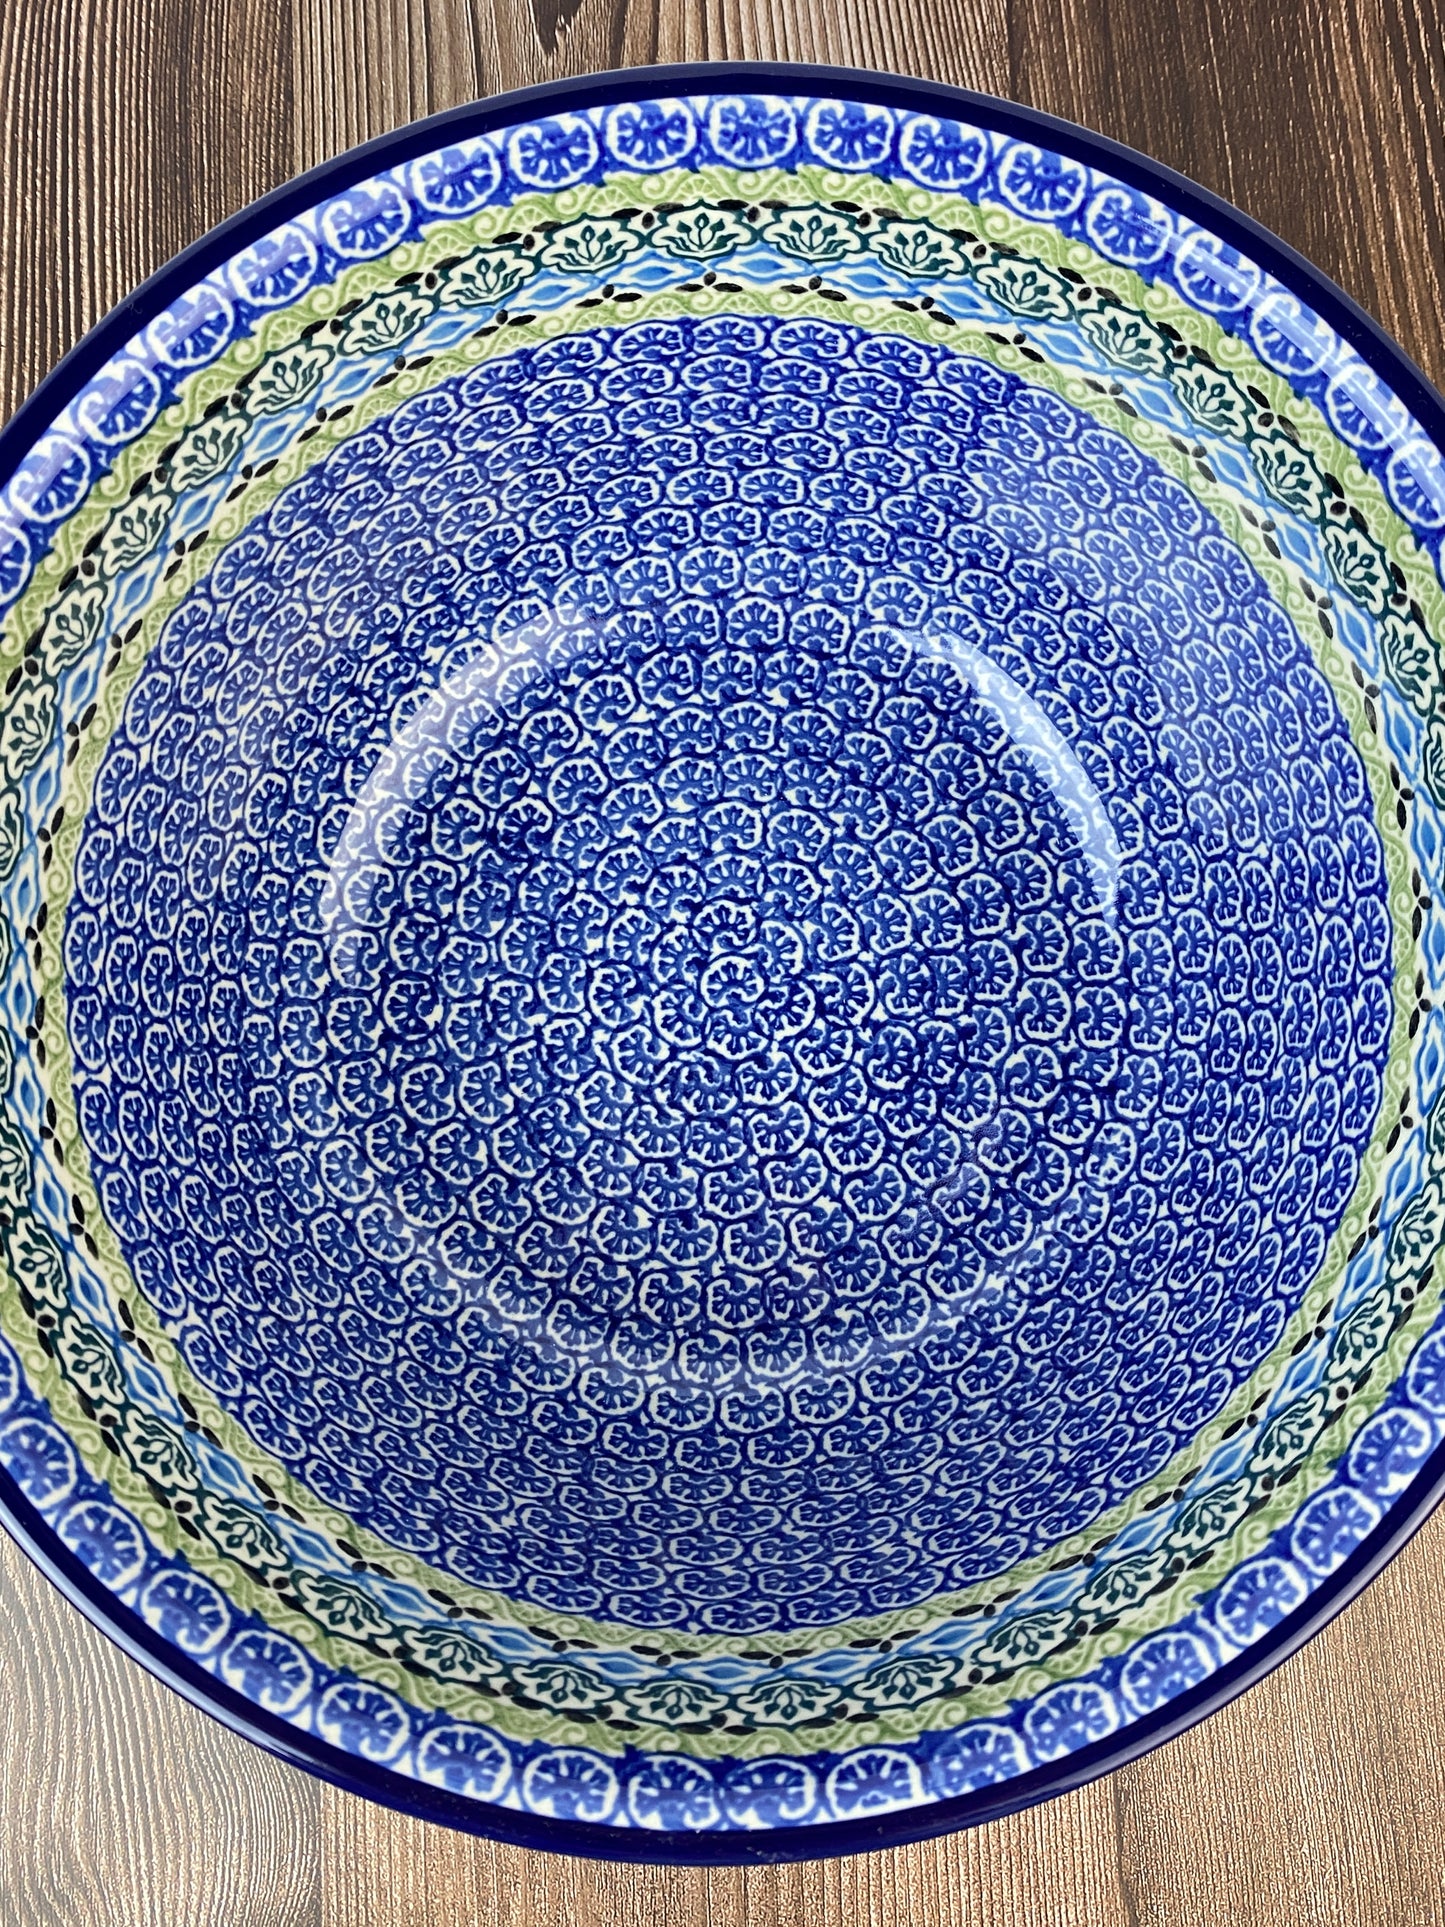 Large Mixing Bowl - Shape 113 - Pattern 1858